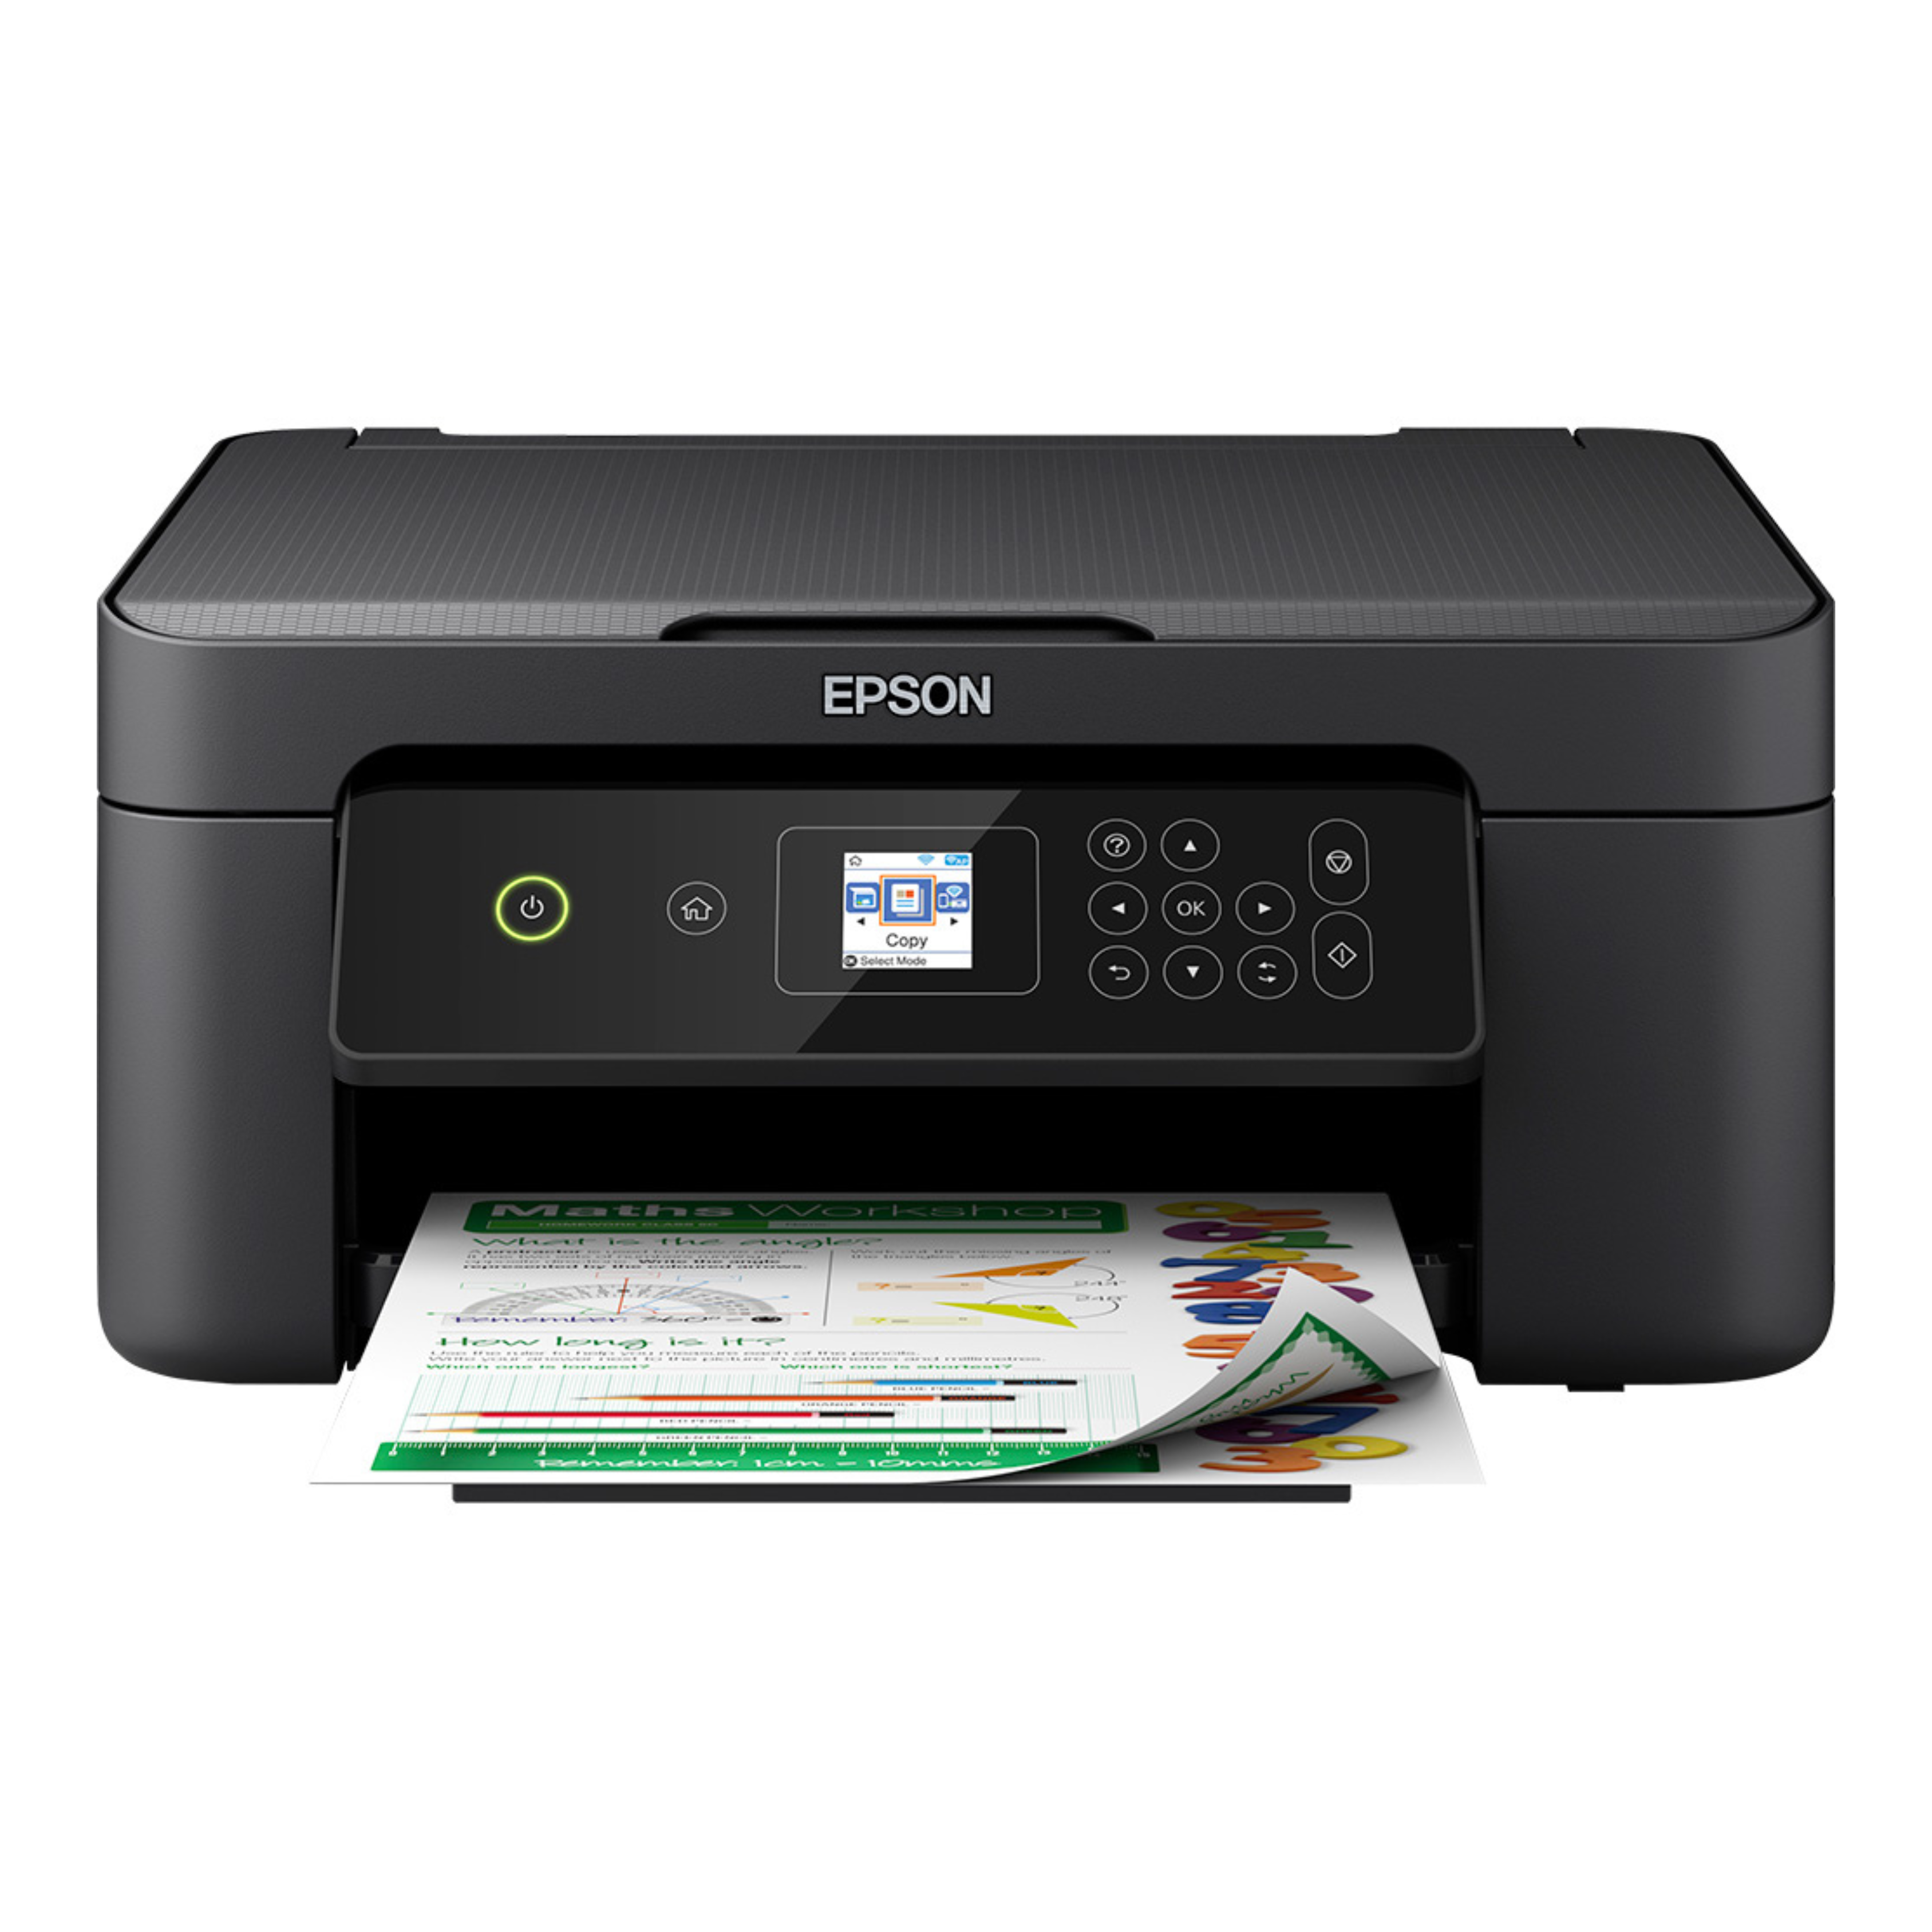 Epson XP-3200 All-in-one printer scanner copier